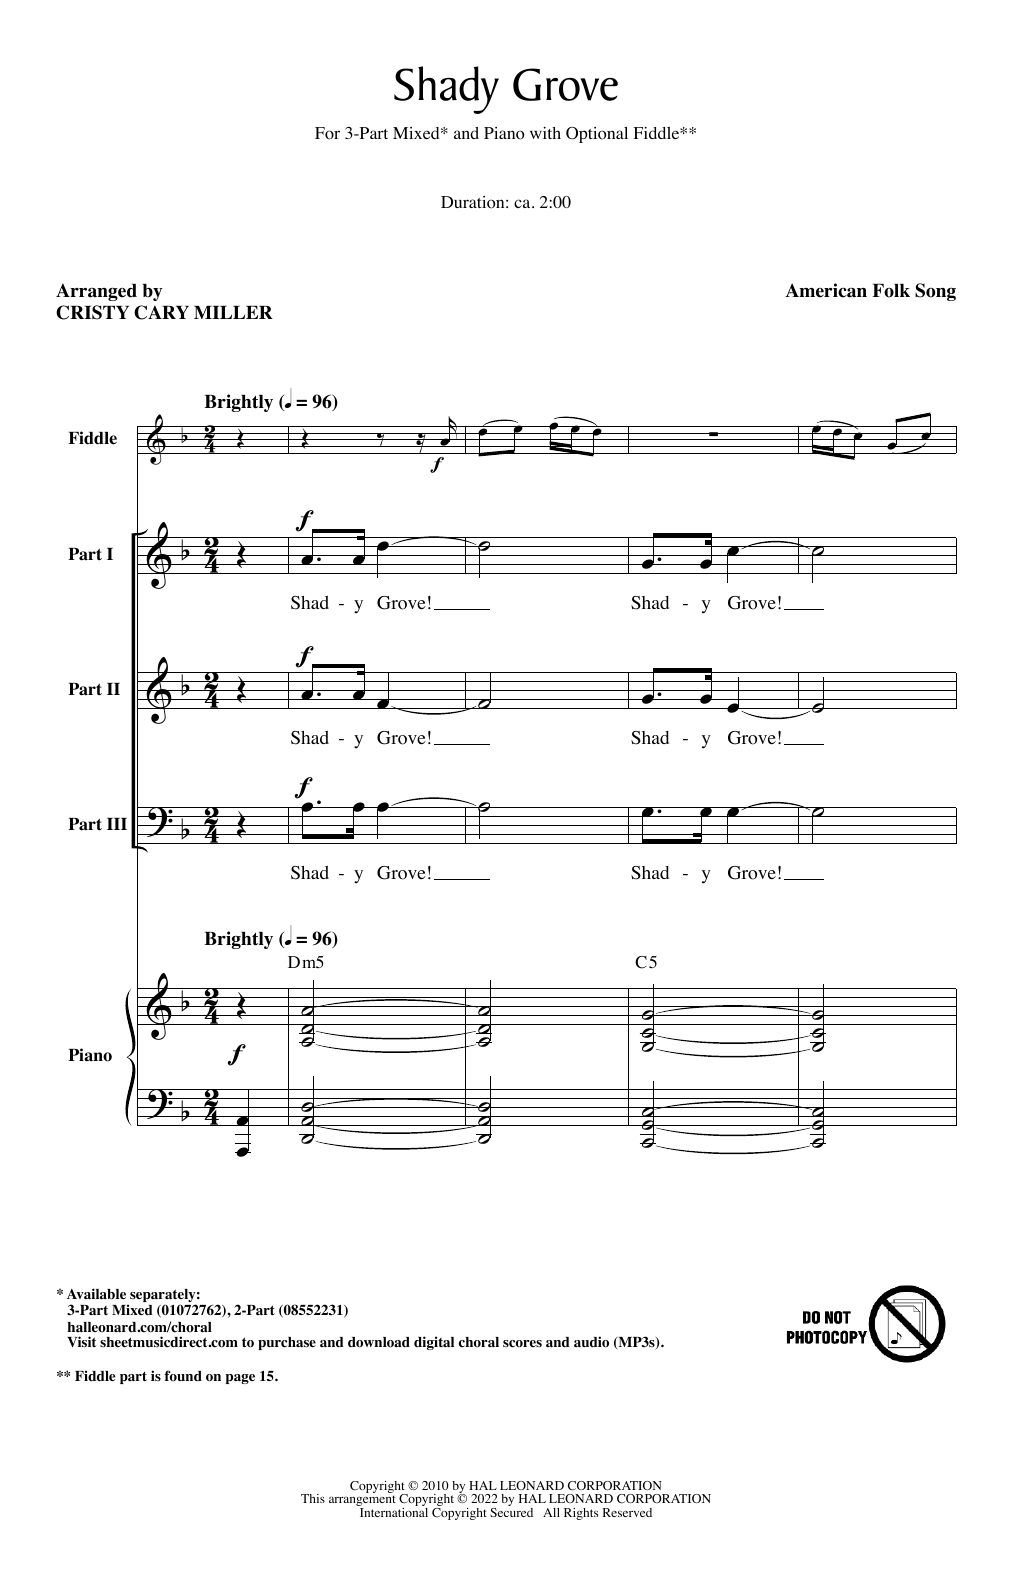 Appalachian Folk Song Shady Grove (arr. Cristi Cary Miller) sheet music notes and chords arranged for 3-Part Mixed Choir